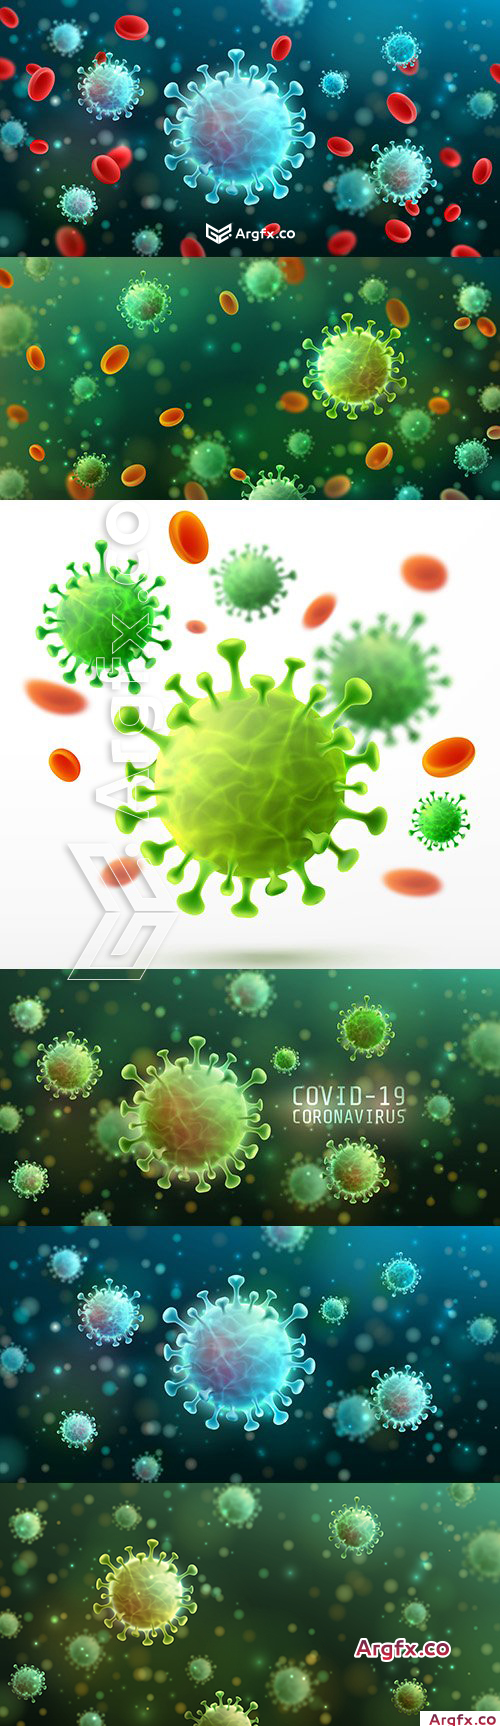 Coronavirus 2019-nkov and cell diseases viral background